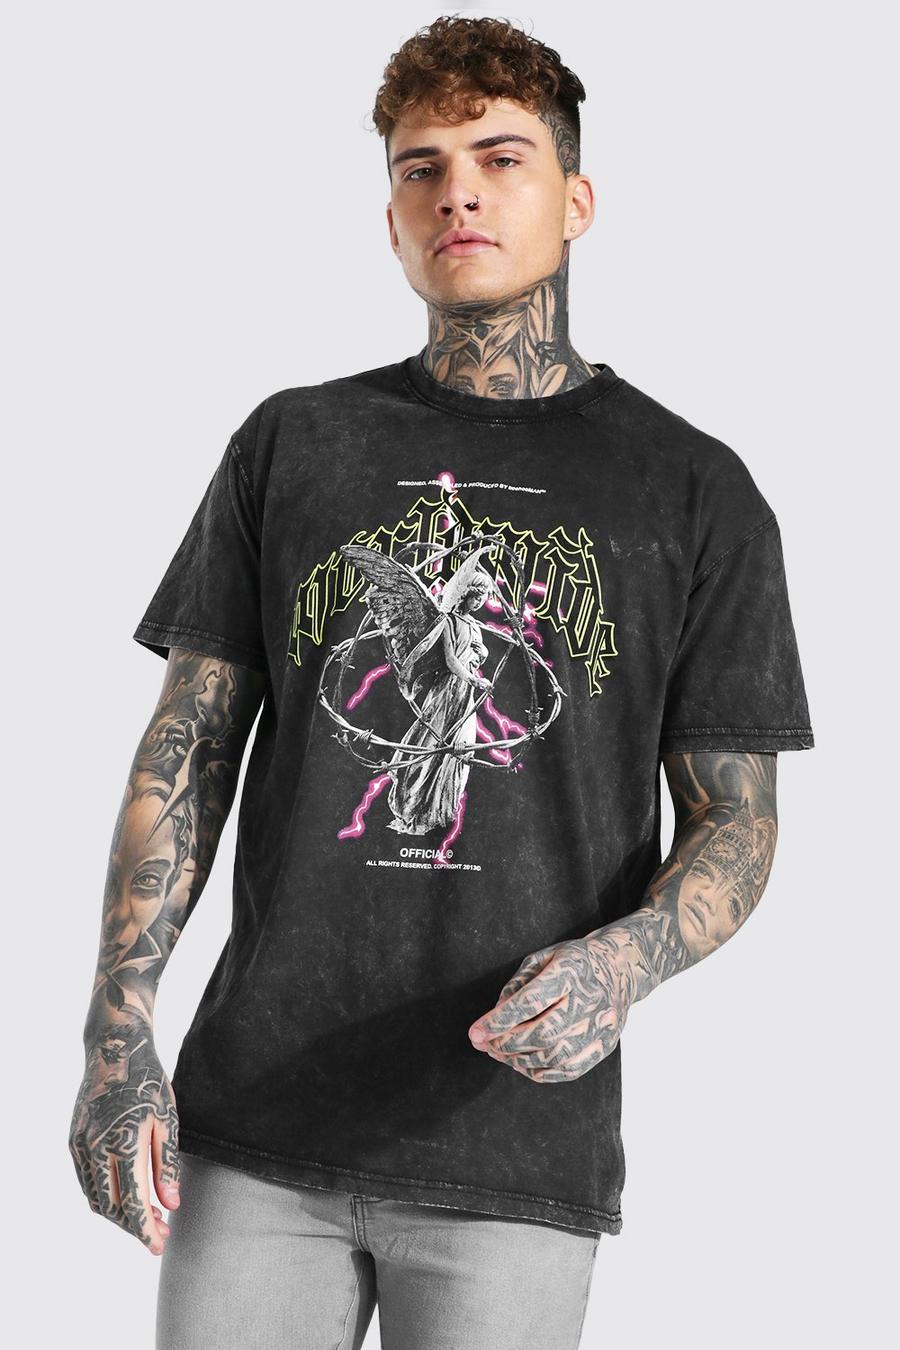 Charcoal grey Oversized Worldwide Acid Wash Graphic T-shirt